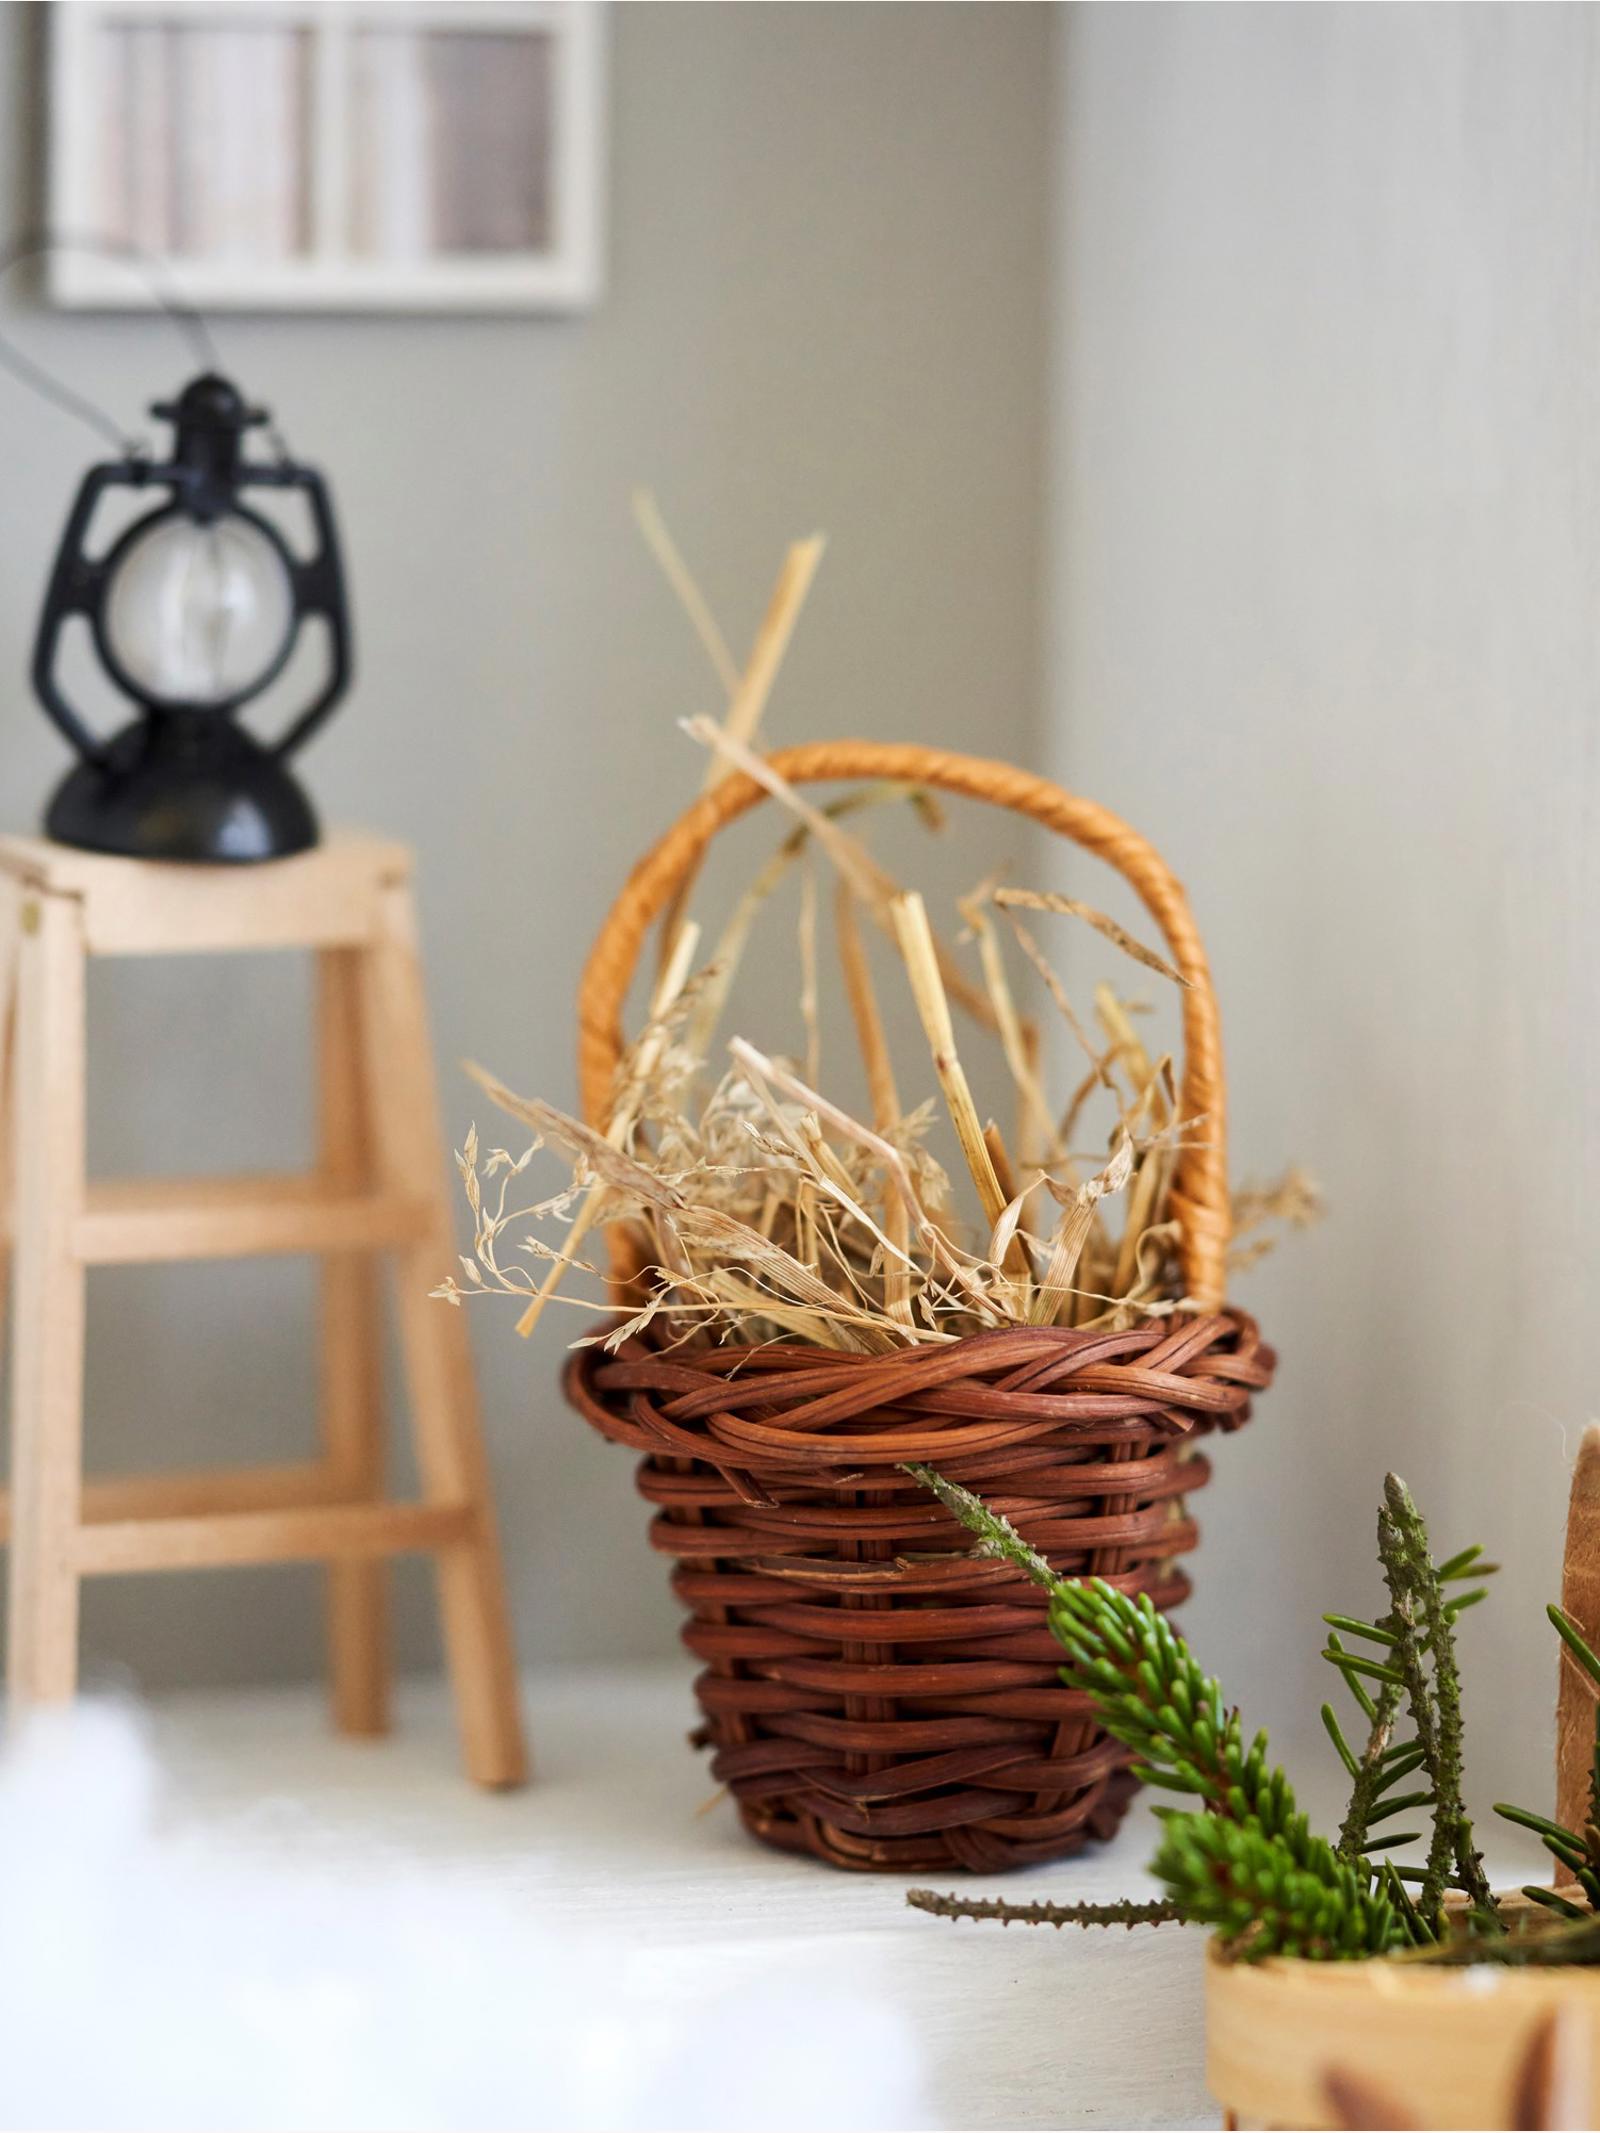 Miniature Wooden Basket (8782997029151)